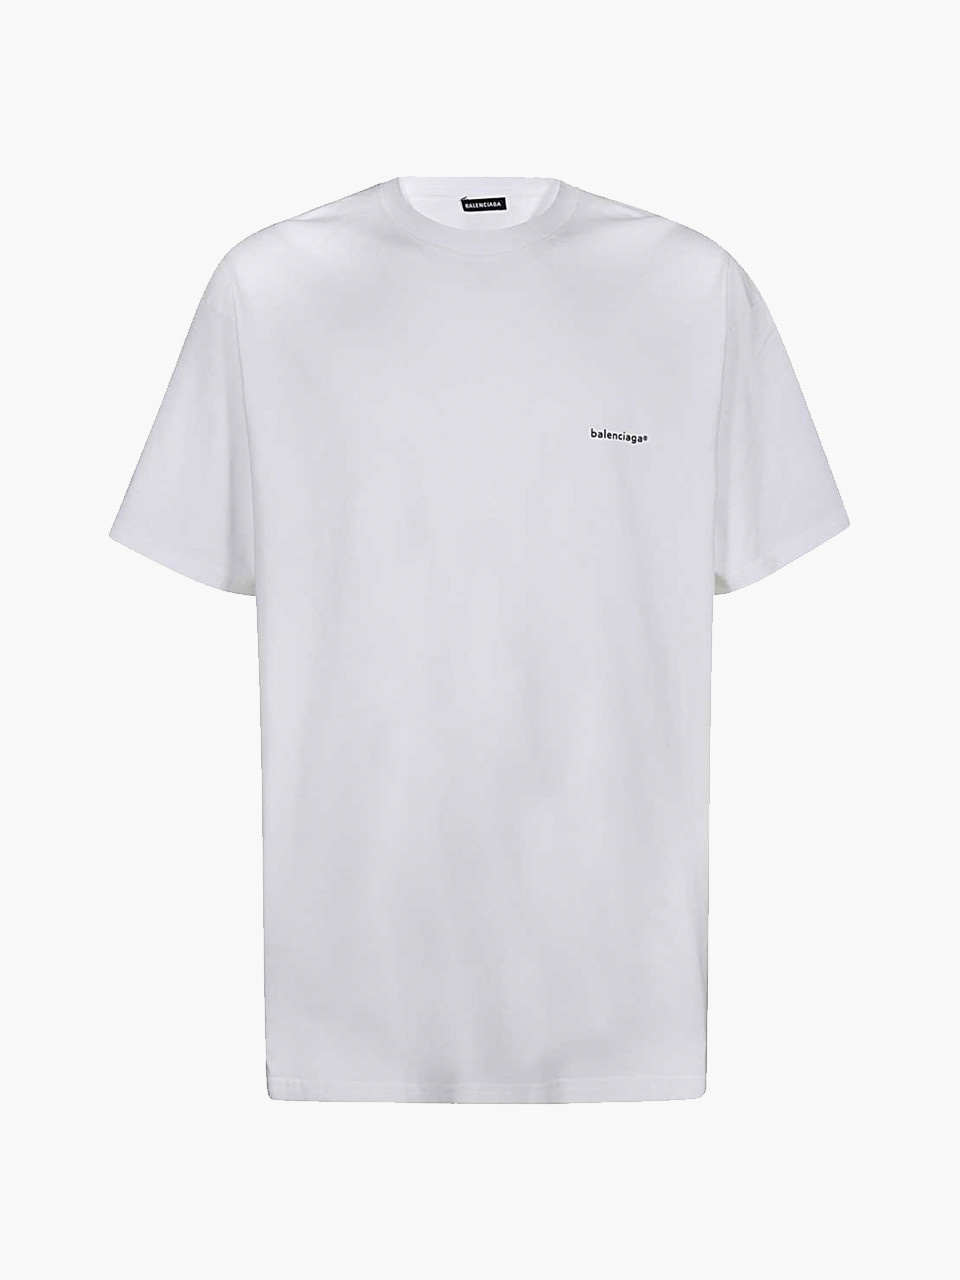 Yeezy Gap Engineered by Balenciaga Logo 34 Sleeve Tshirt White  SS22  US